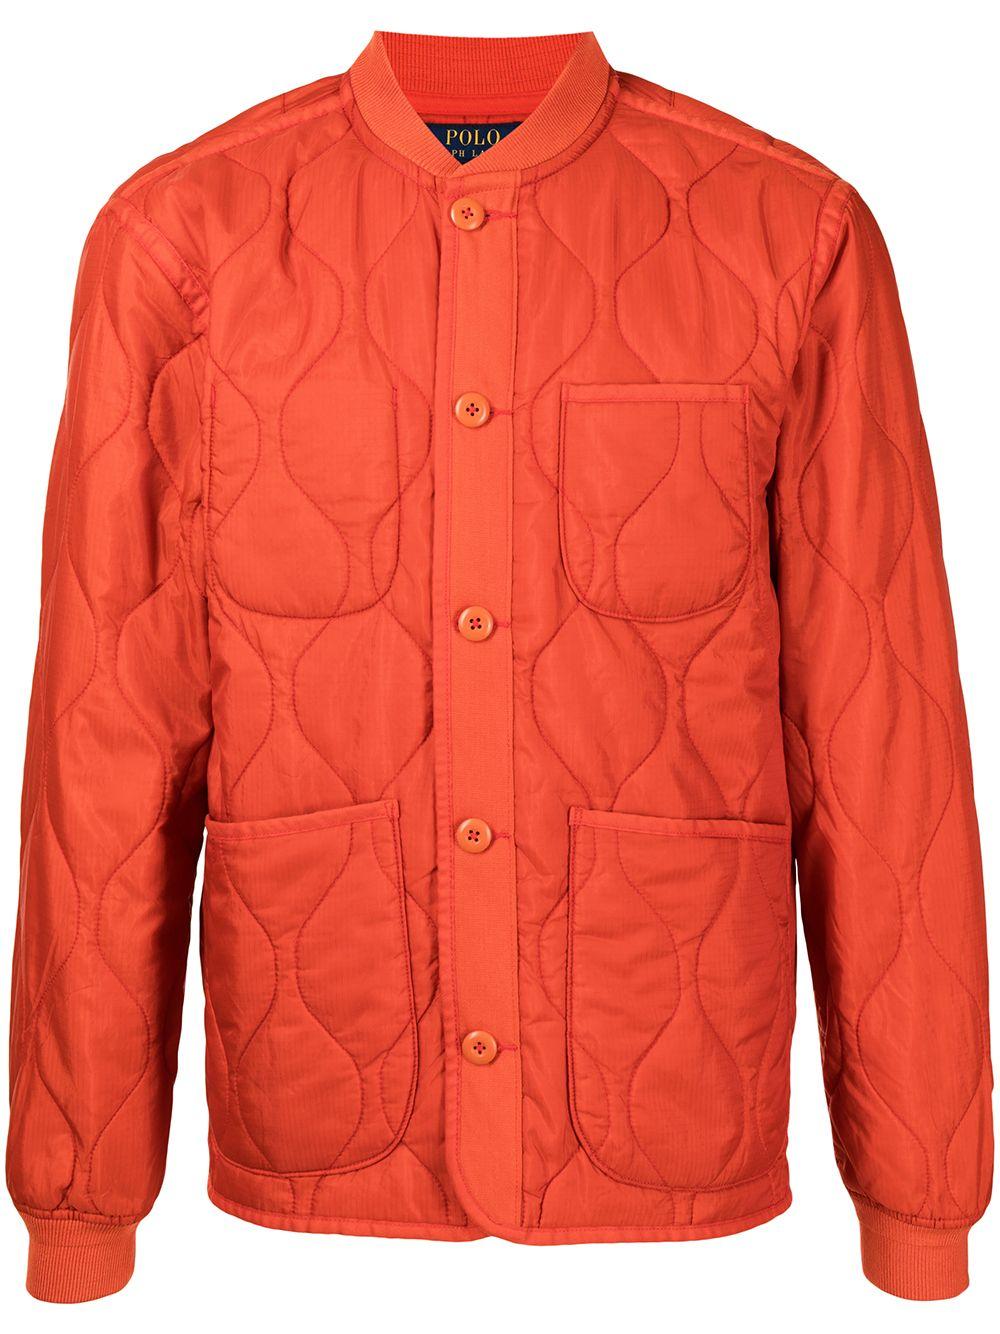 Polo Ralph Lauren Quilted Bomber Jacket in Orange for Men - Lyst